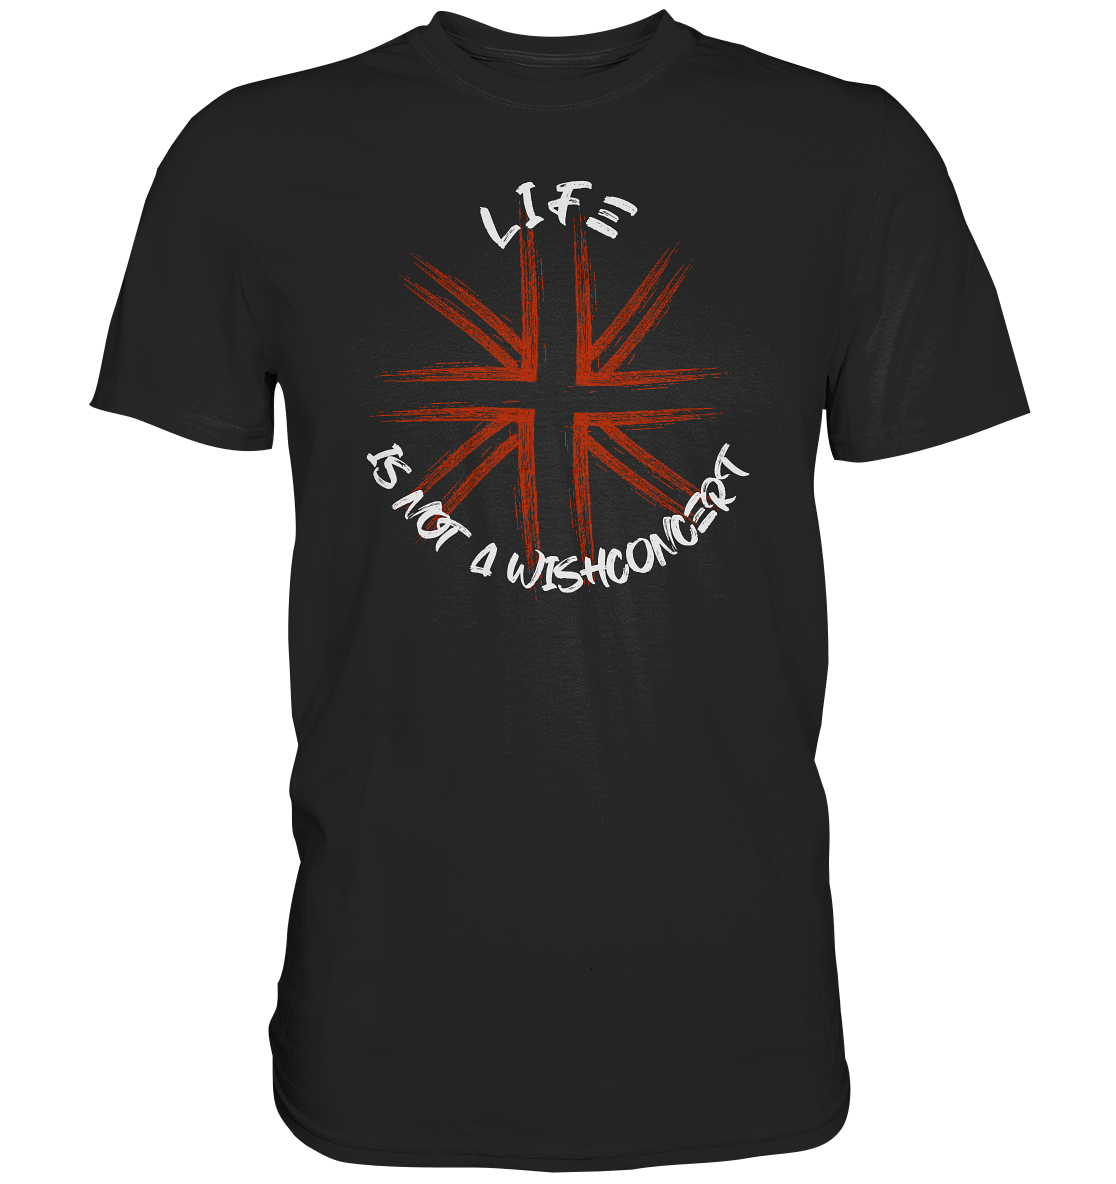 "Life is not a wishconcert" - Premium Shirt